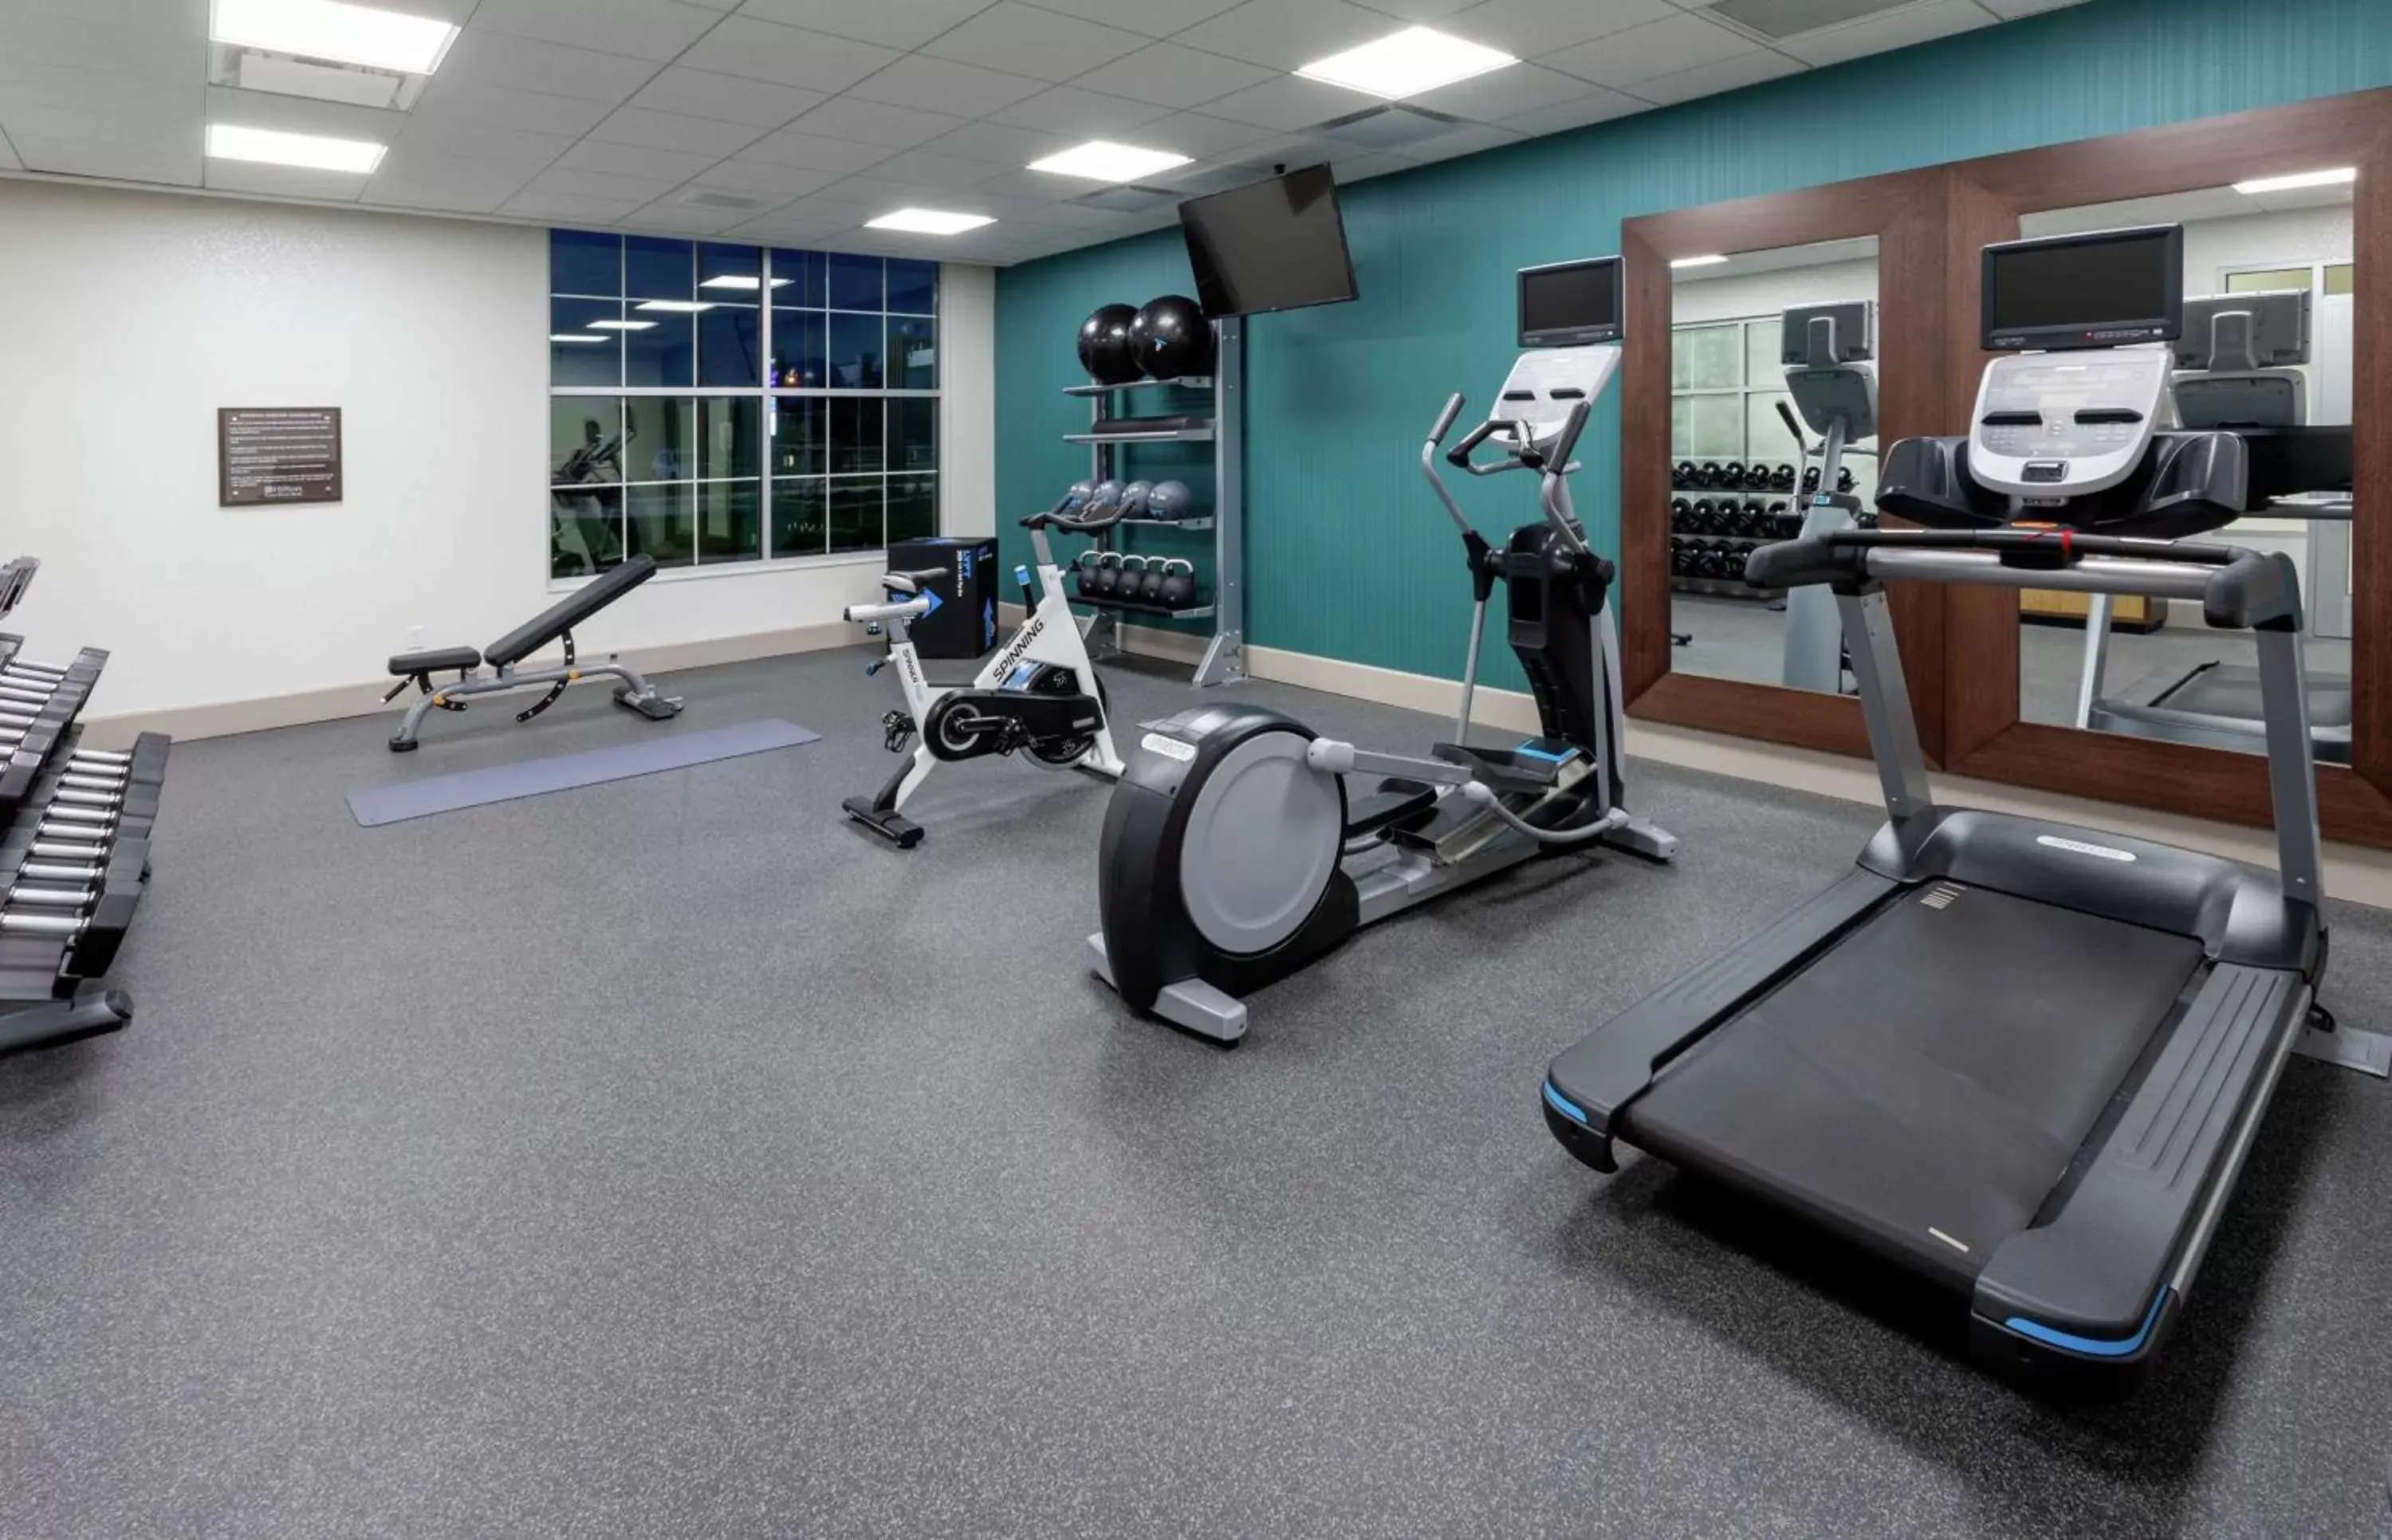 Fitness centre/facilities, Fitness Center/Facilities in Hilton Garden Inn St. Cloud, Mn